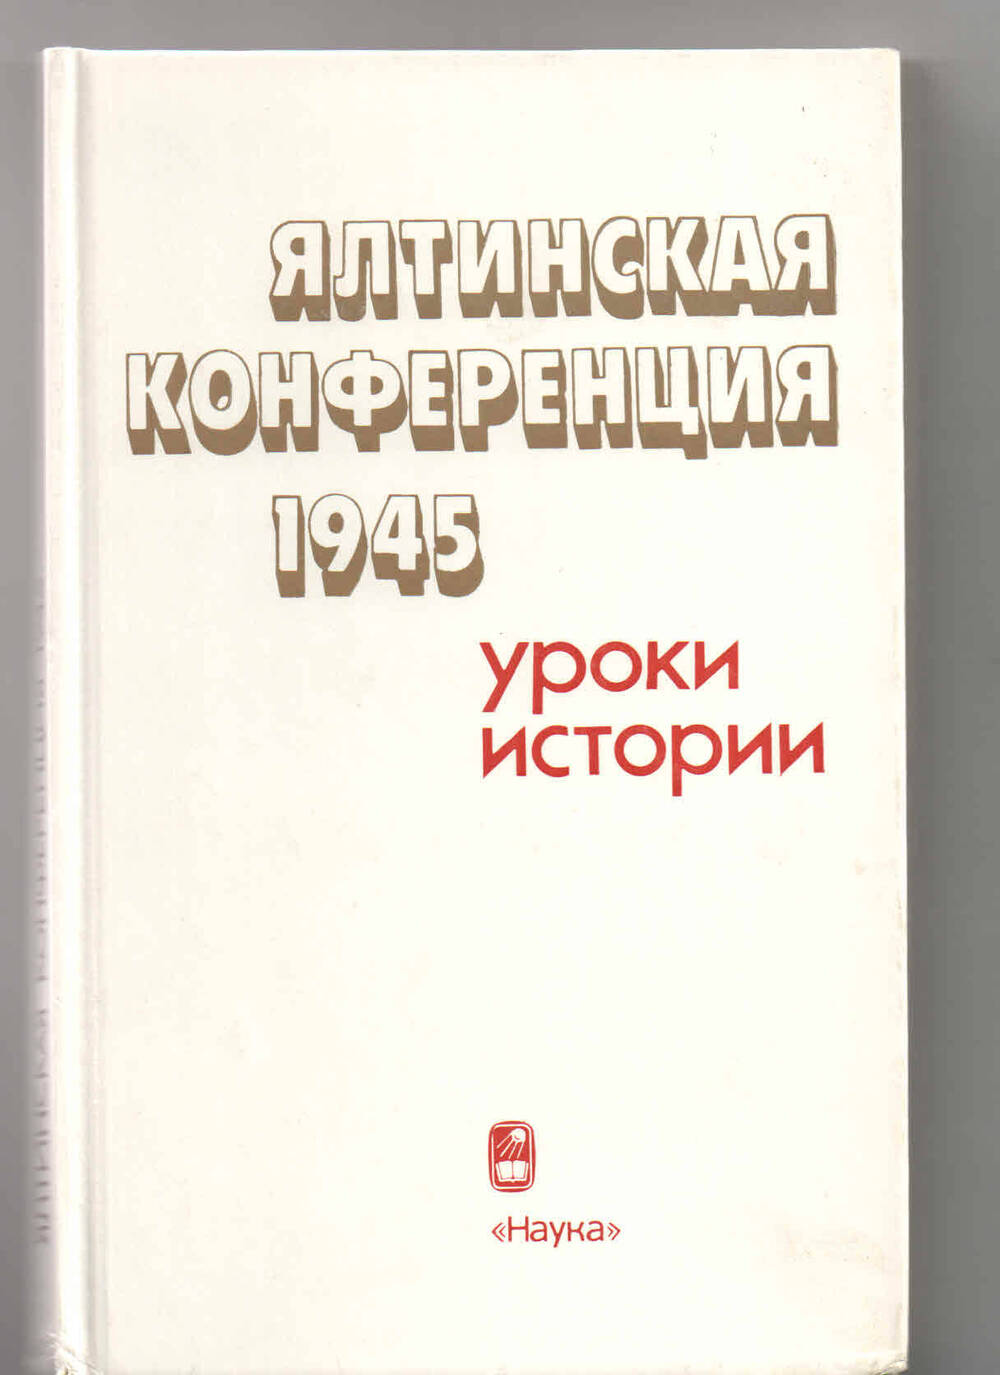 Книга: Ялтинская конференция 1945 г./ Уроки истории. М.: Наука, 1985.  -191 с.